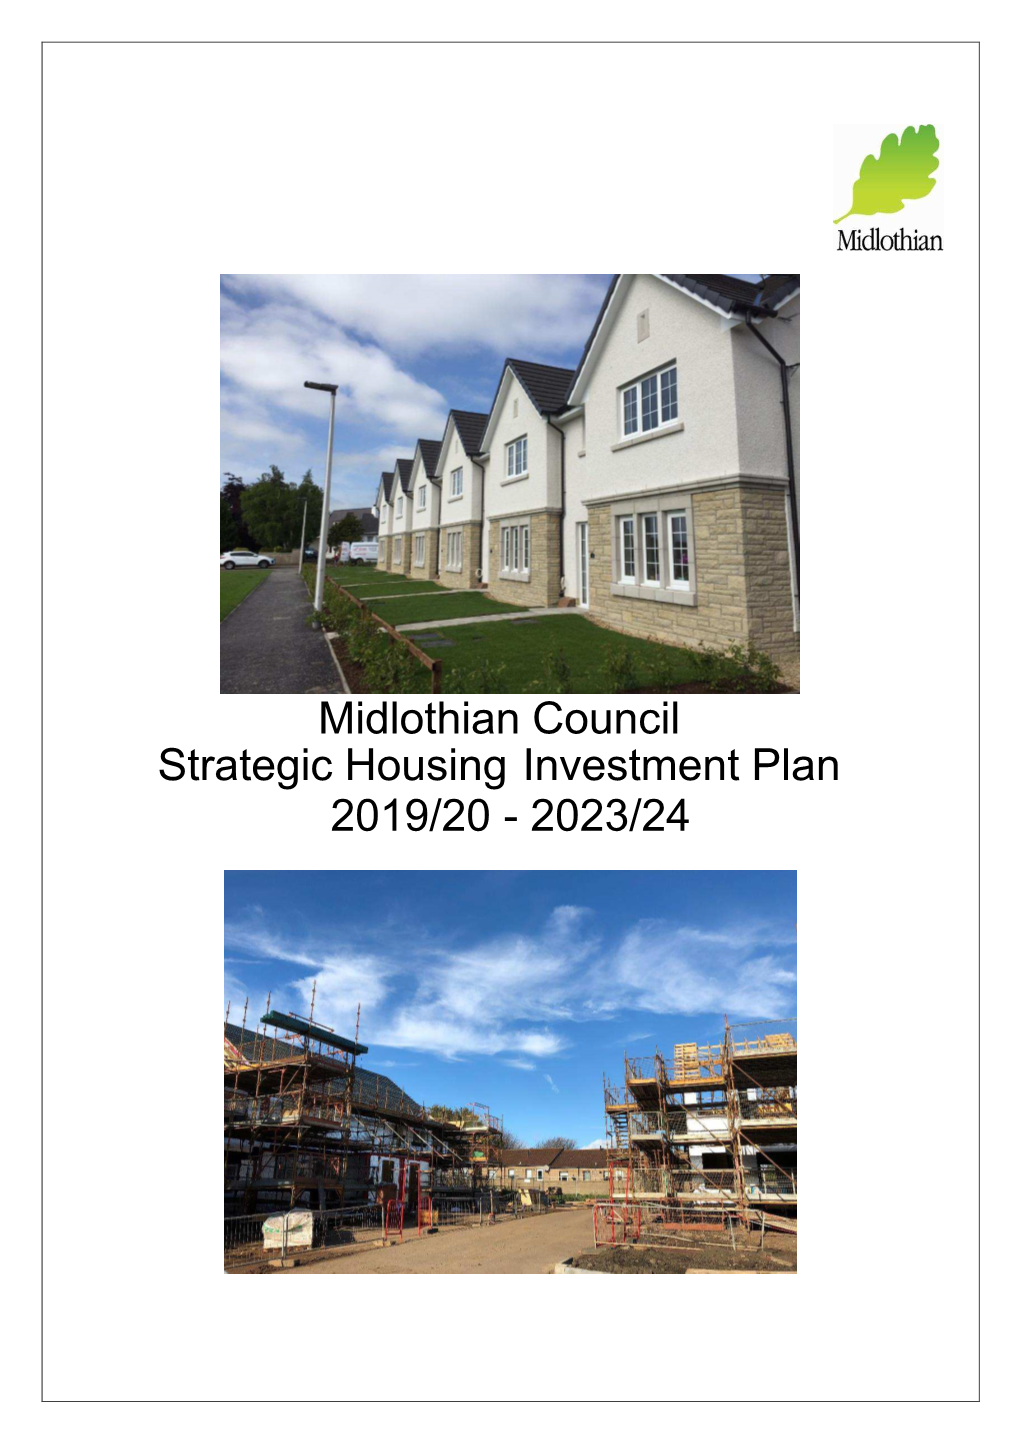 Midlothian Council Strategic Housing Investment Plan 2019/20 - 2023/24